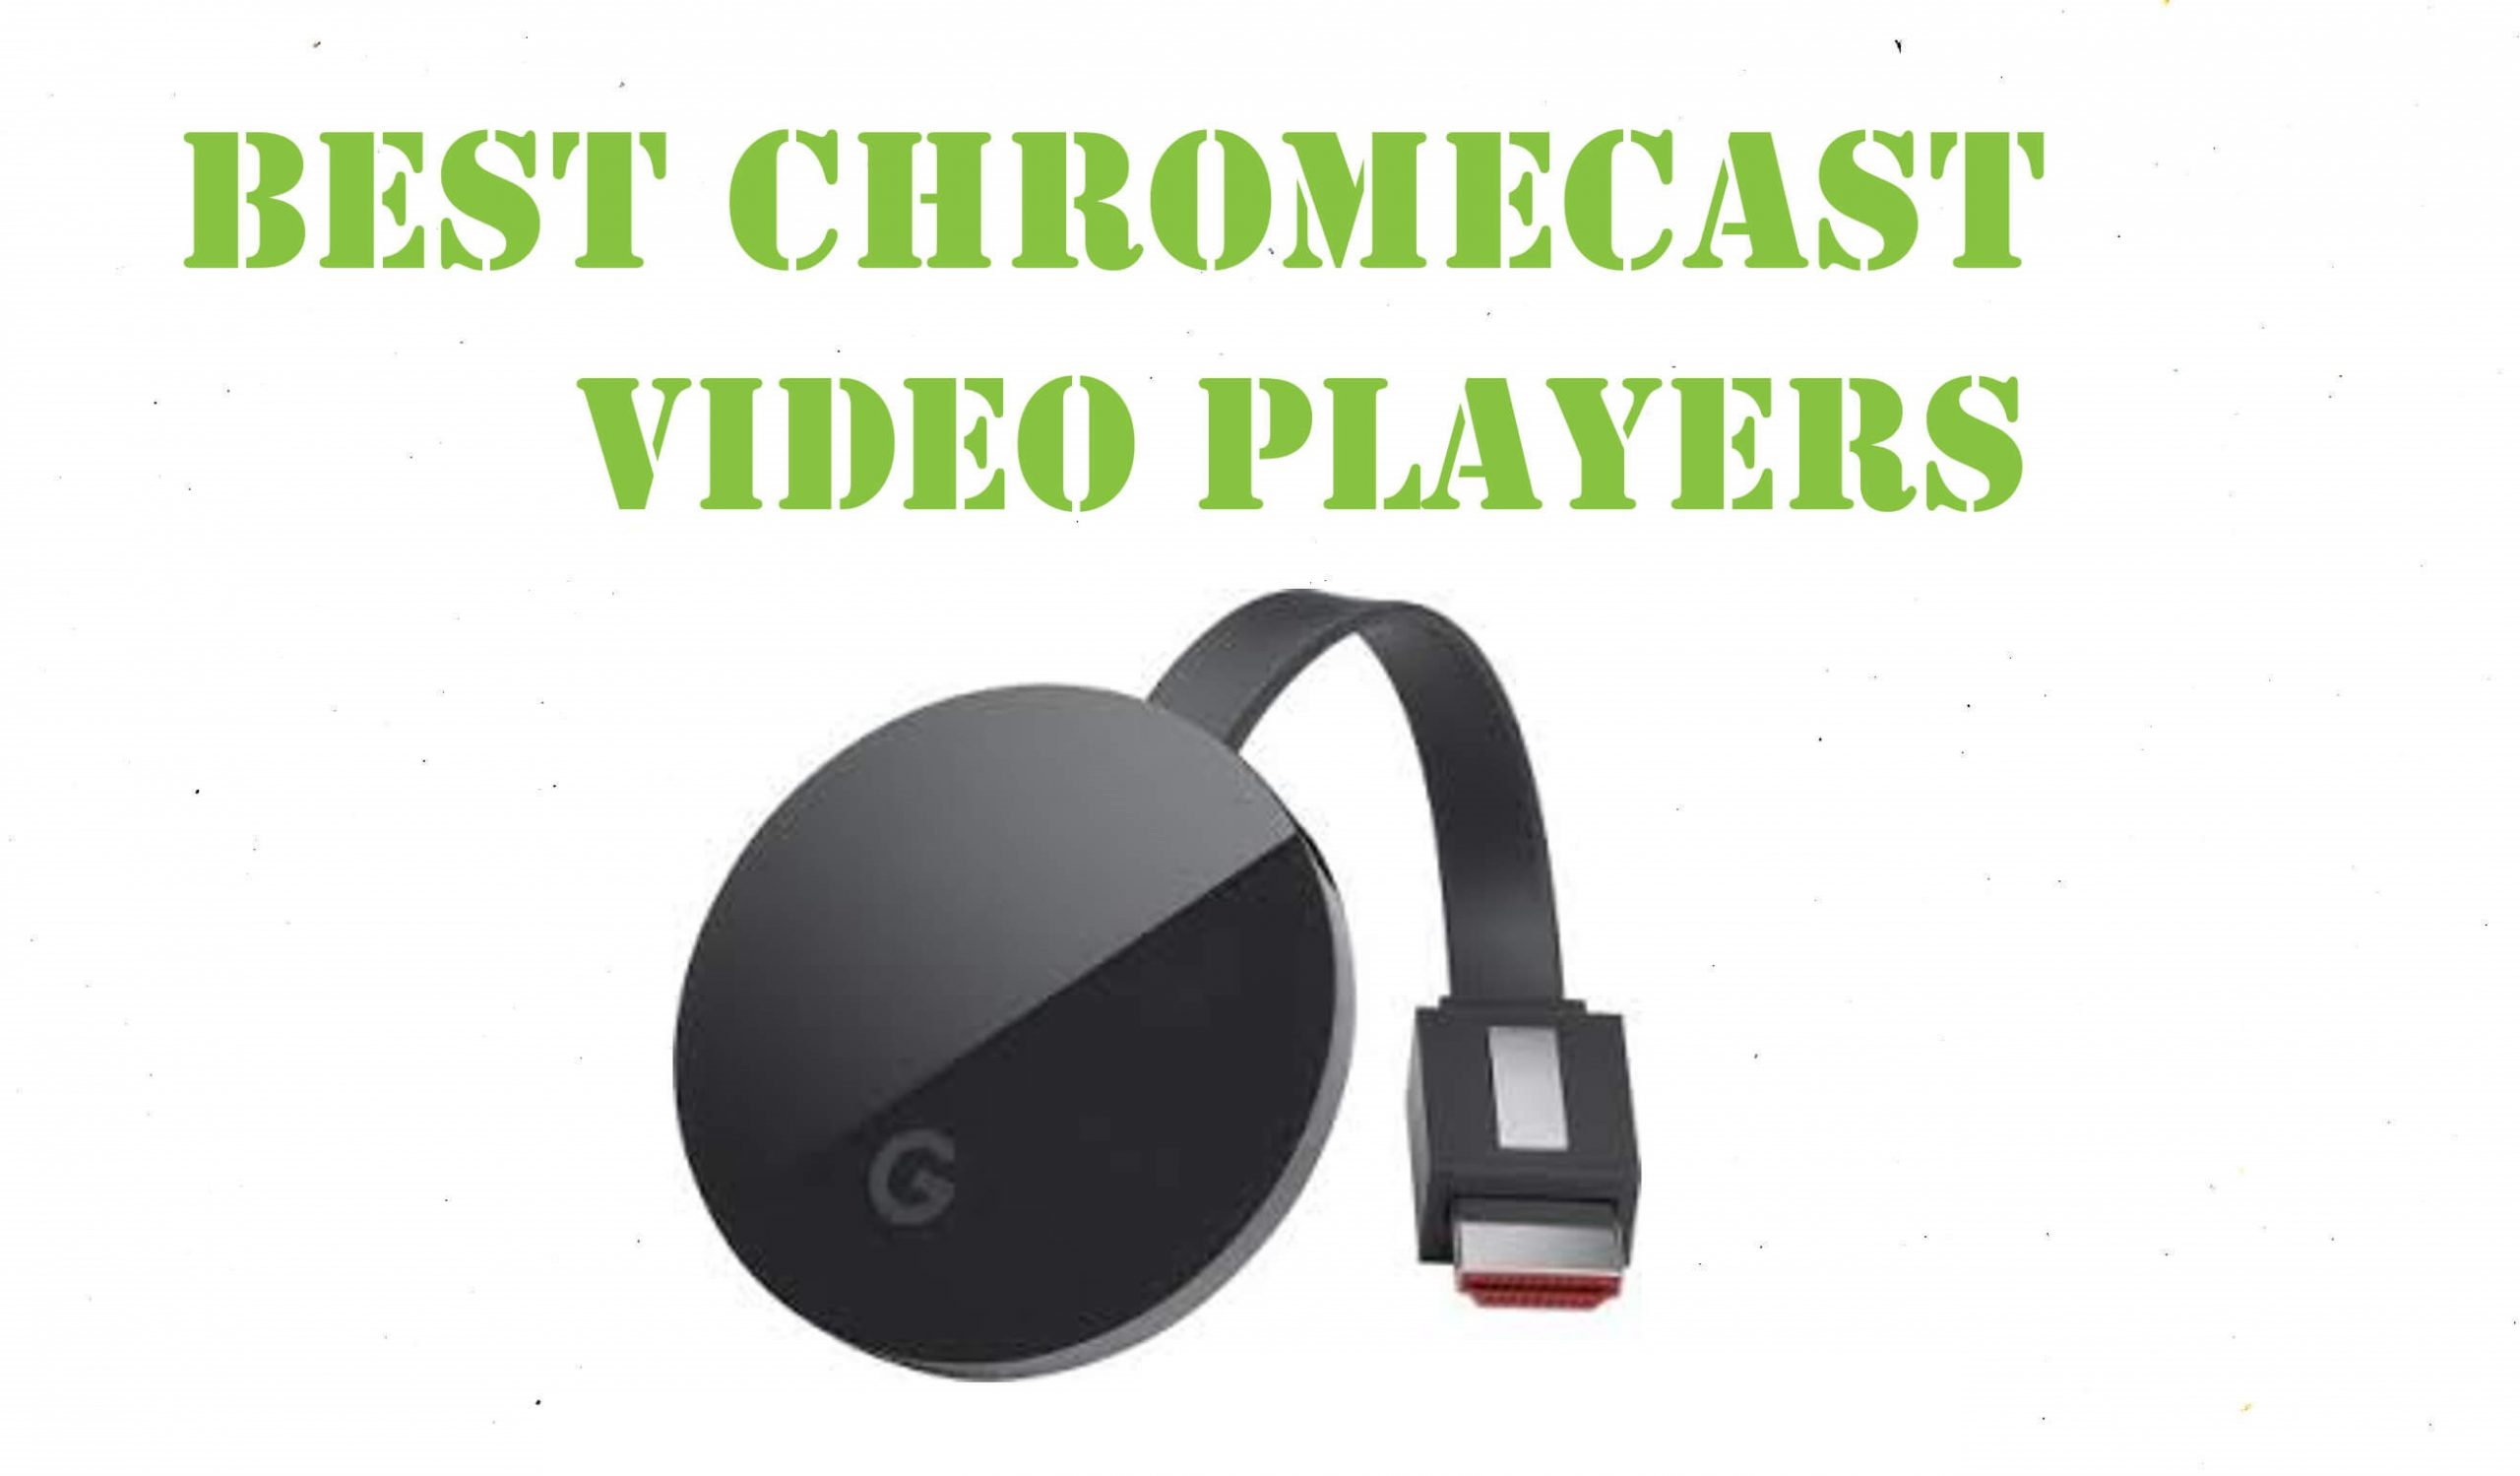 amazon video cast to chromecast